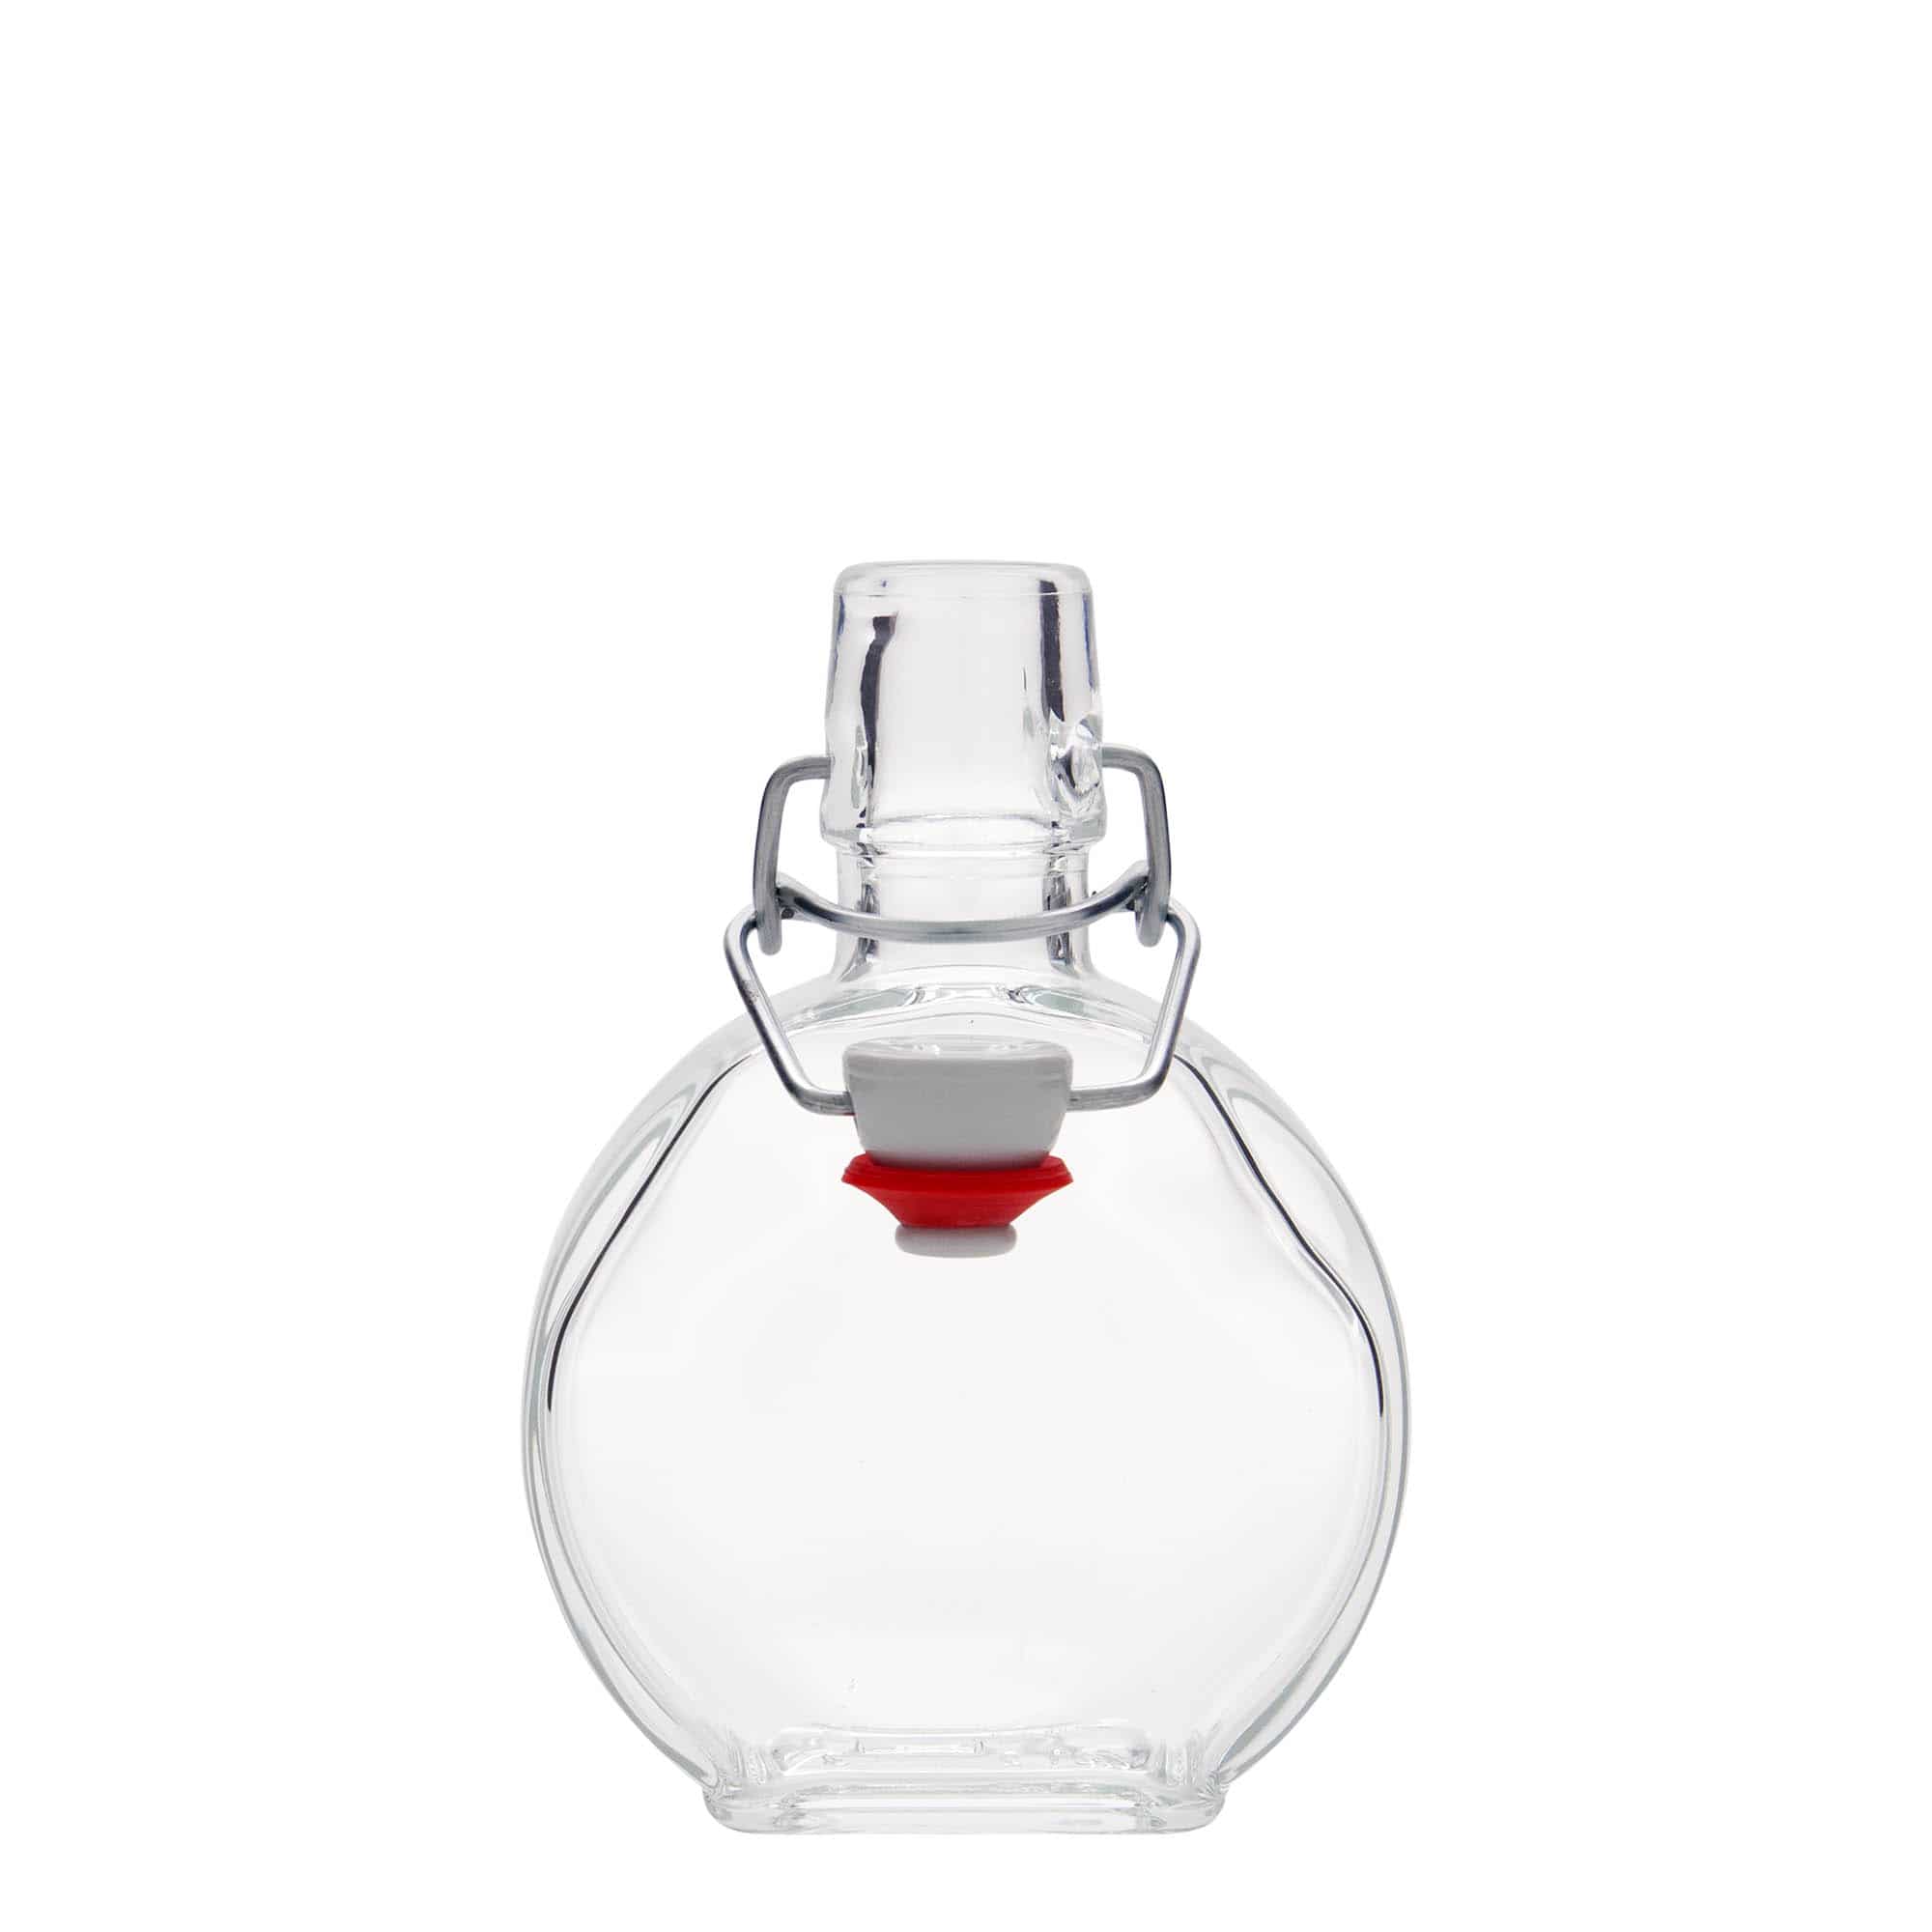 200 ml glass bottle 'Sensatione', rectangular, closure: swing top